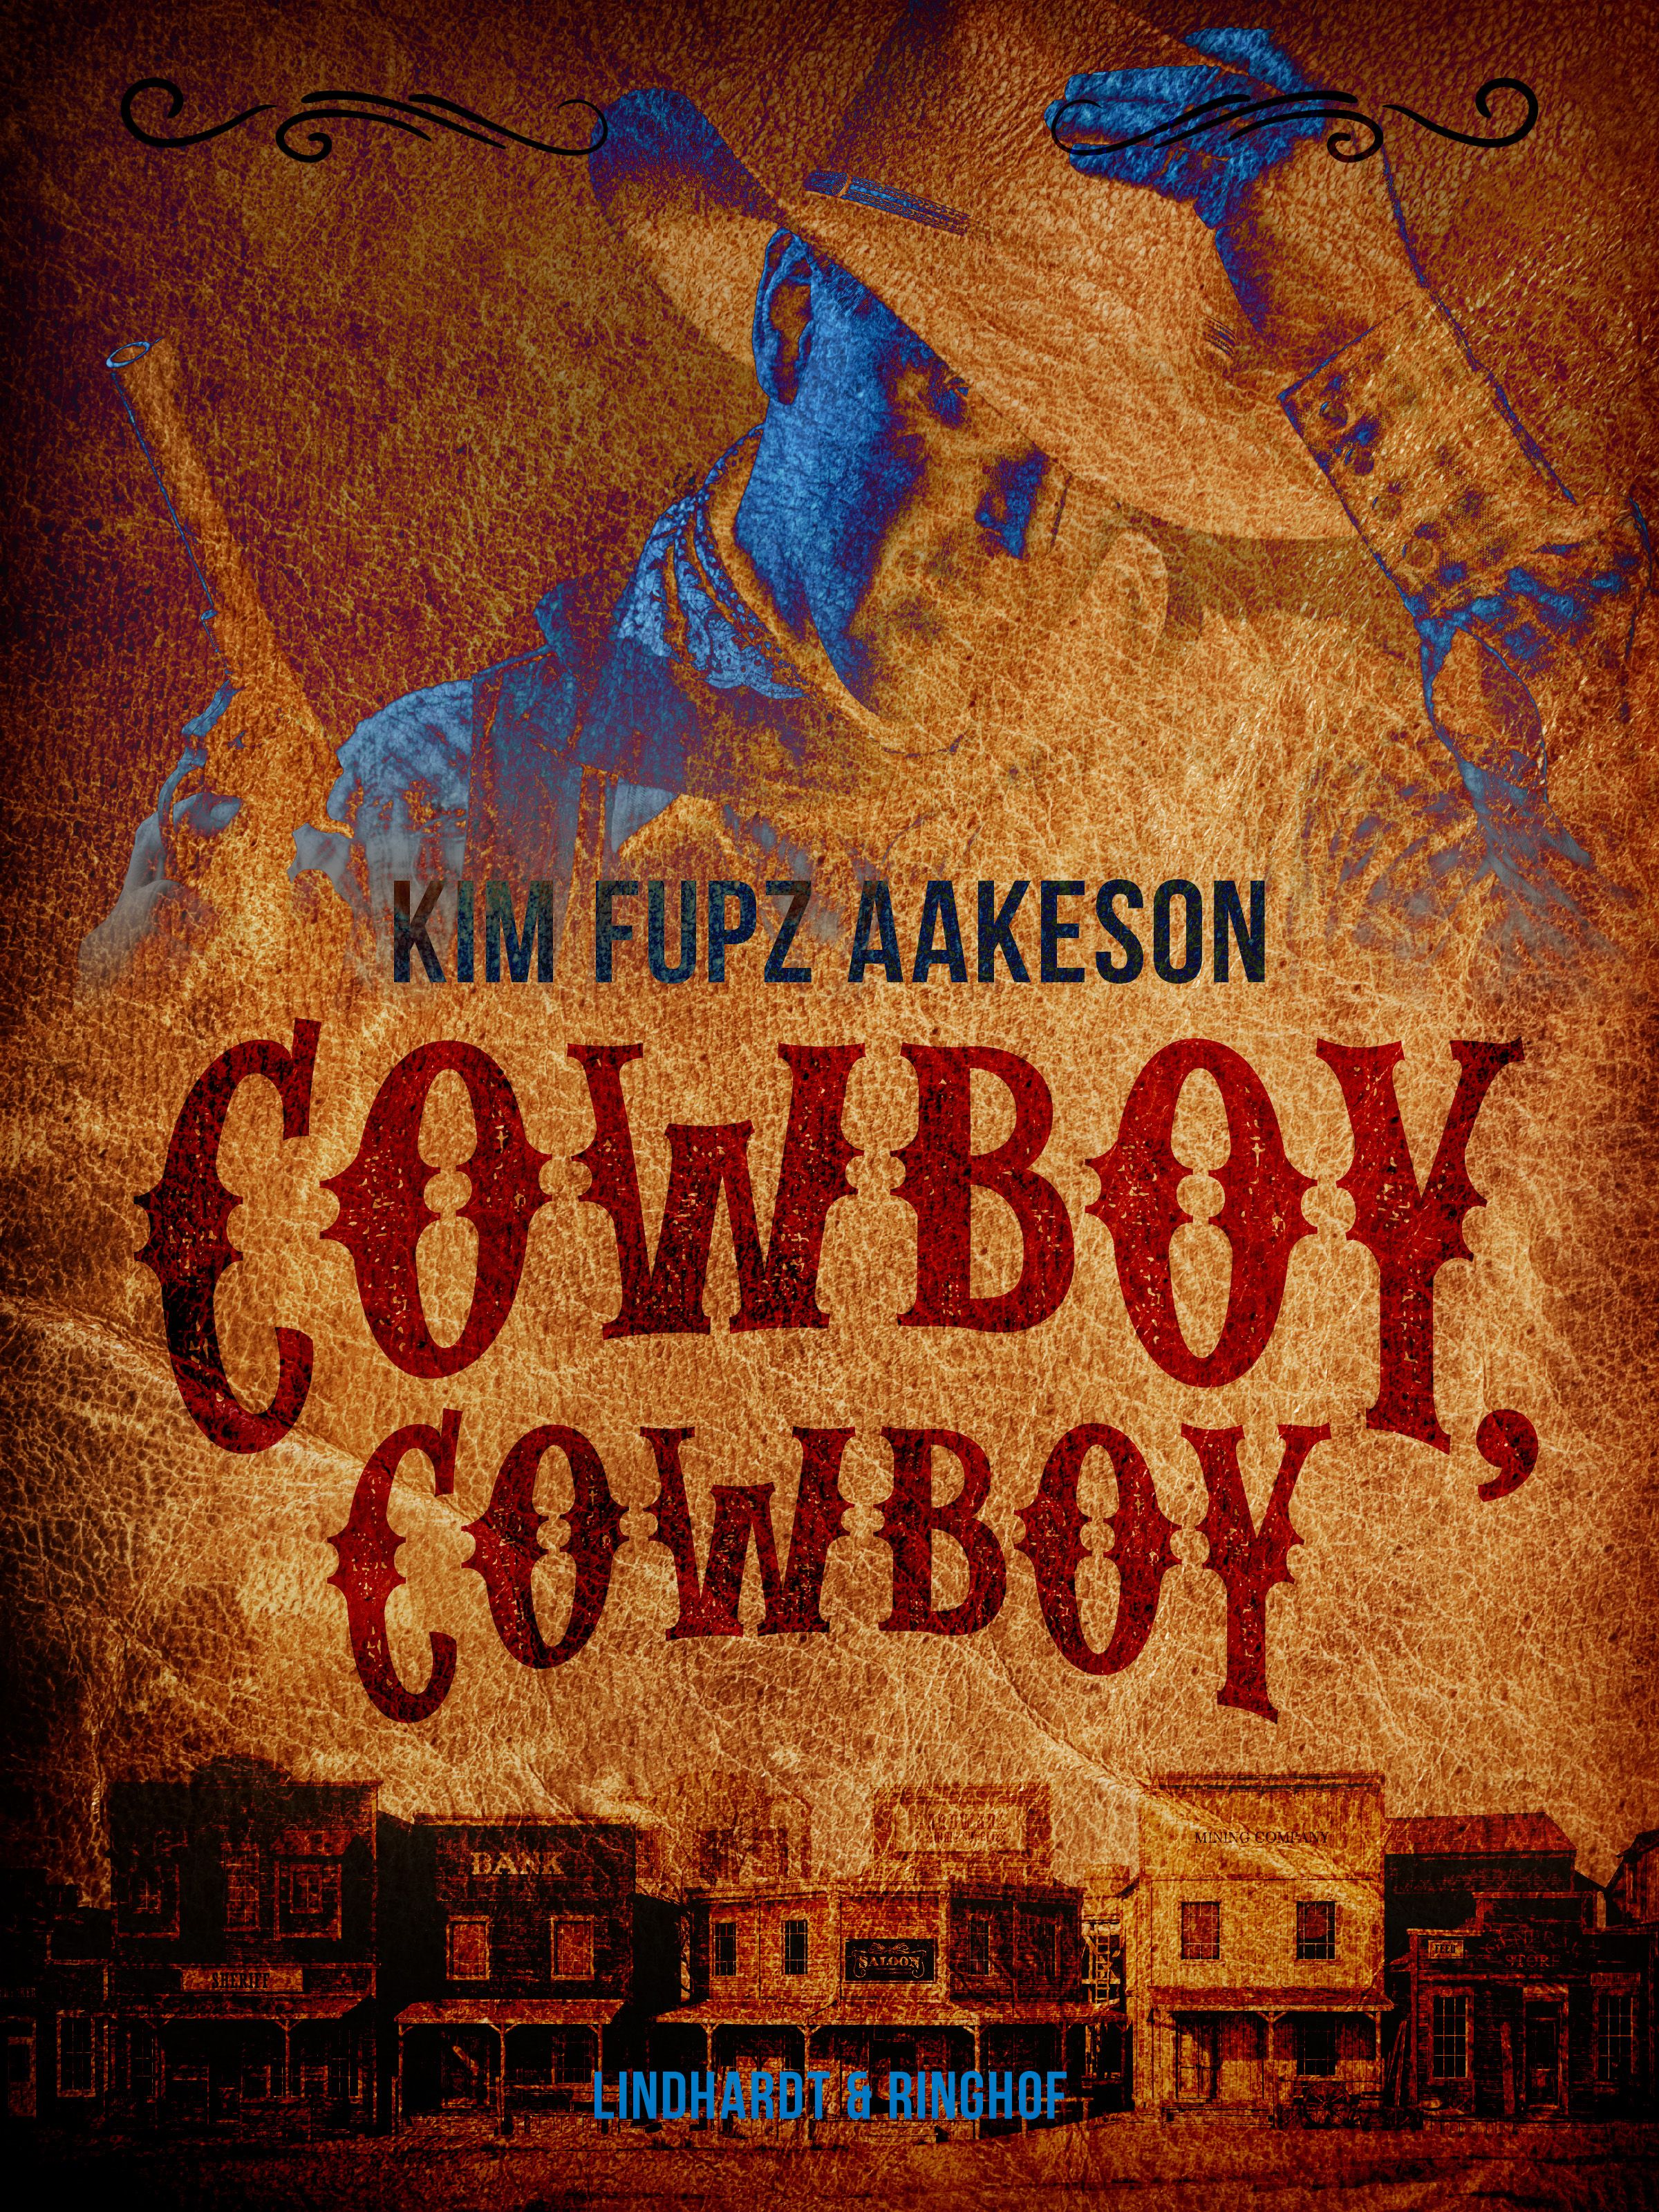 Cowboy, cowboy, eBook by Kim Fupz Aakeson